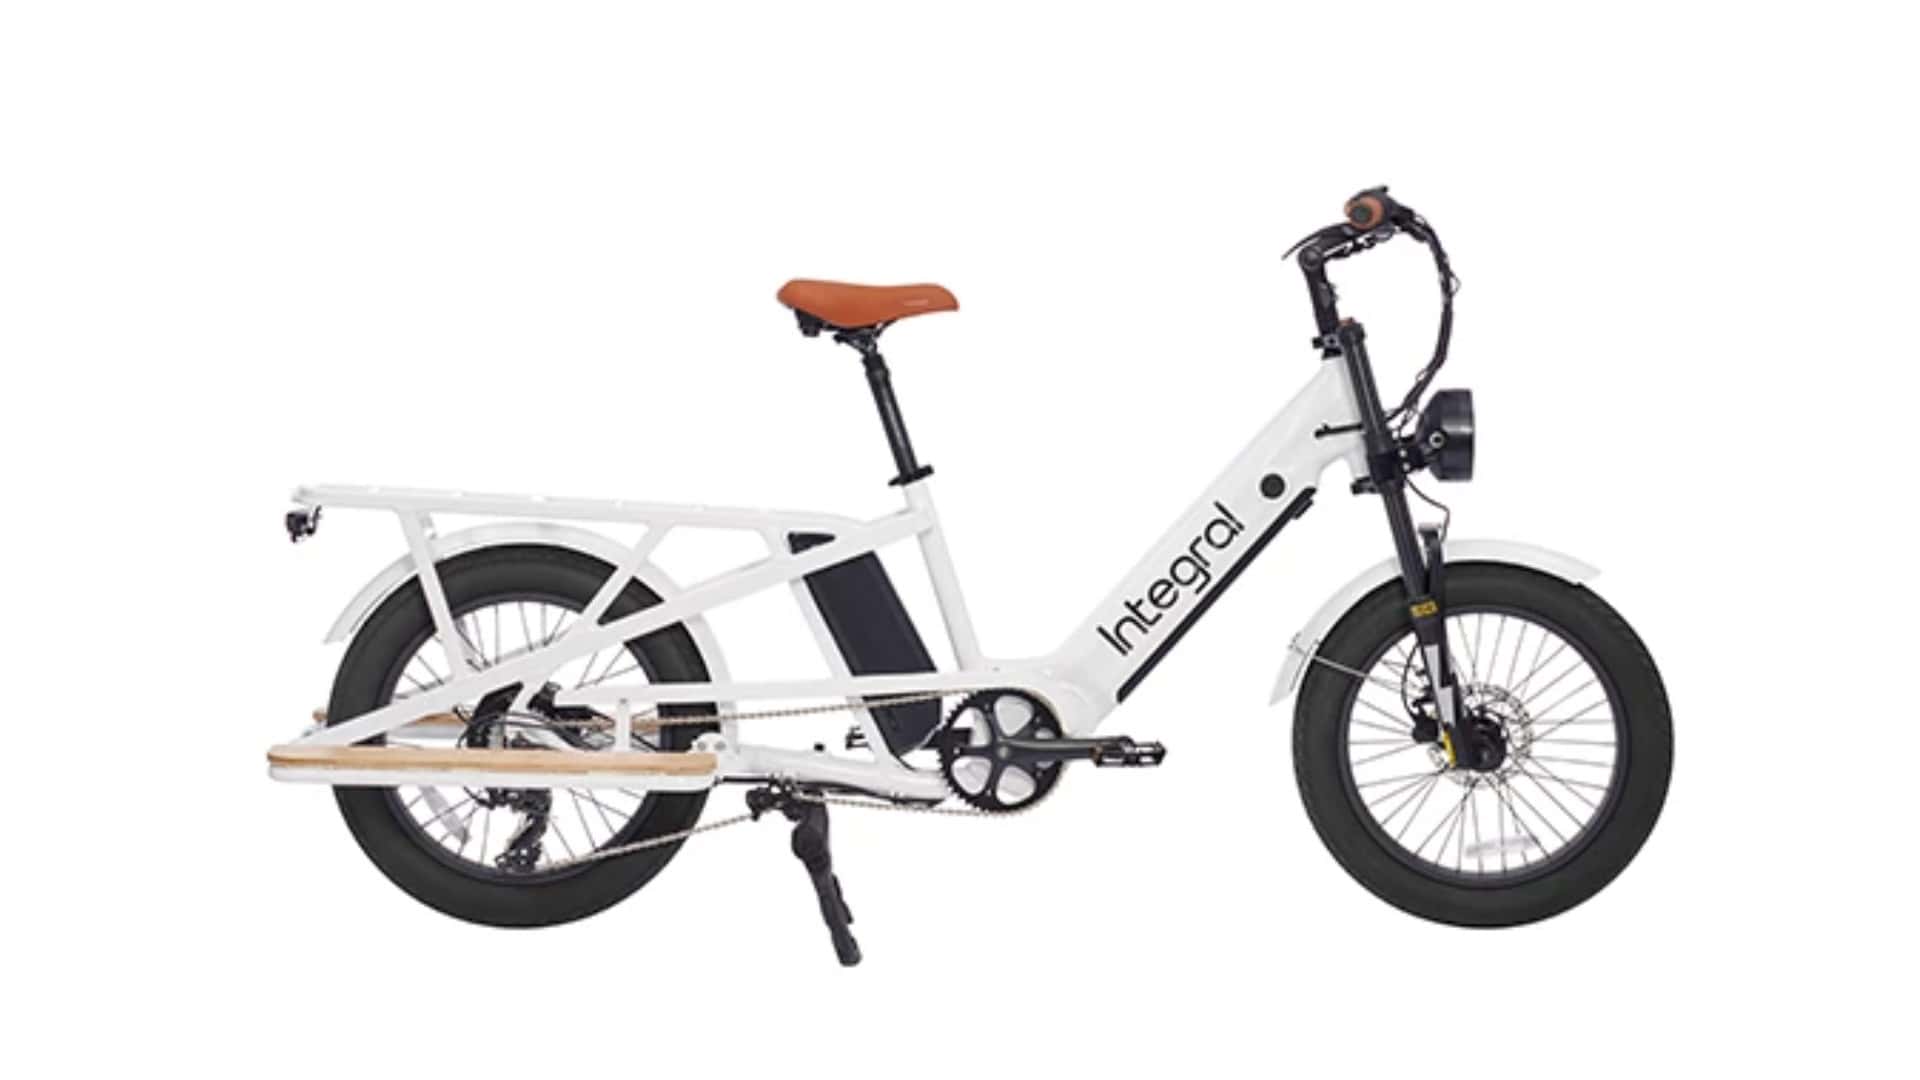 new maven cargo e-bike is designed for women and shorter riders